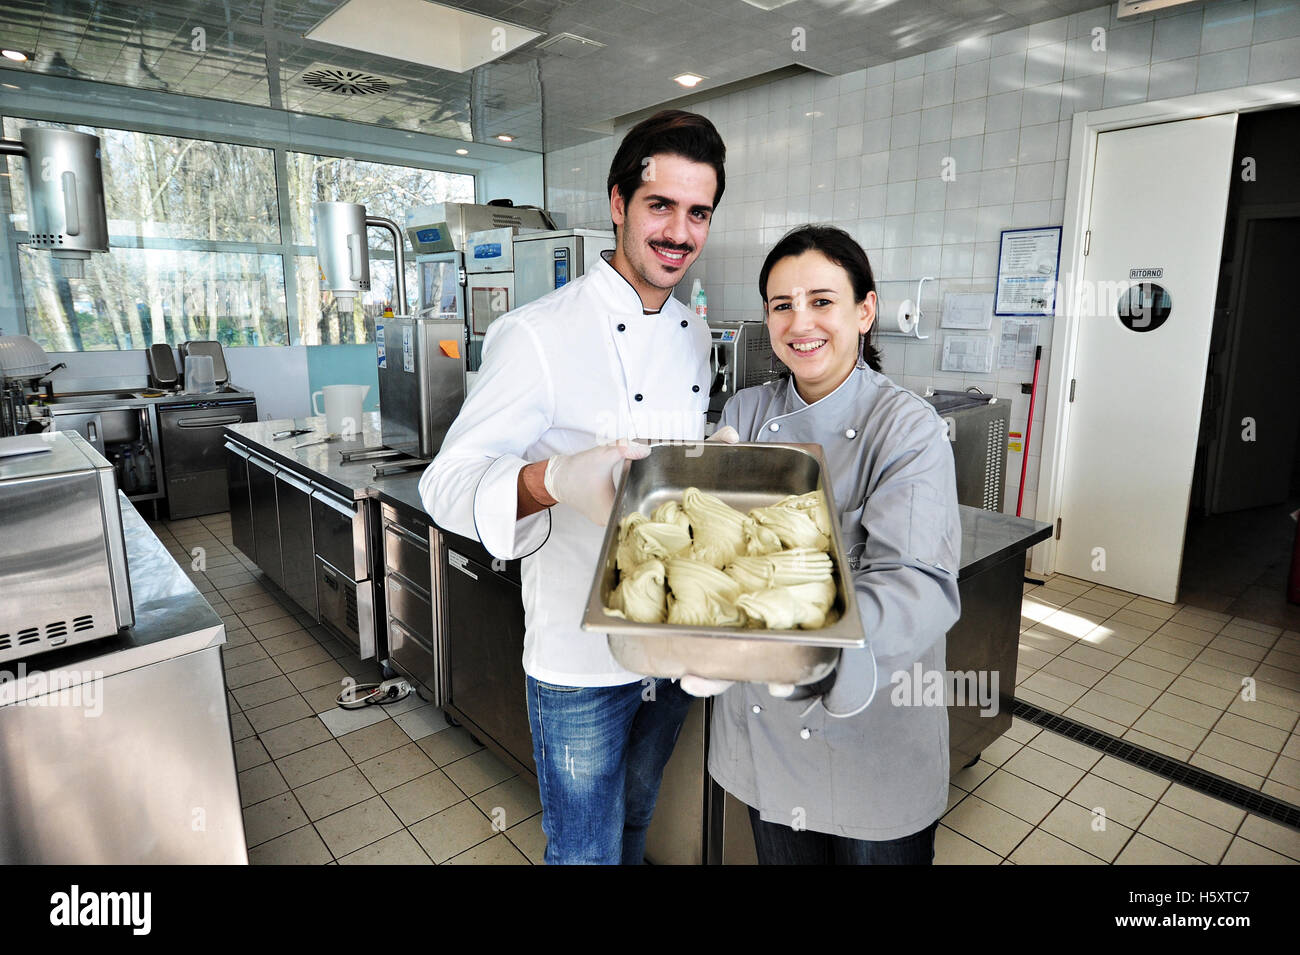 Student Simone Esposito and teacher Luisa Elena Fontana at the Carpigiani gelato university in Anzola nell'Emilia, Italy Stock Photo